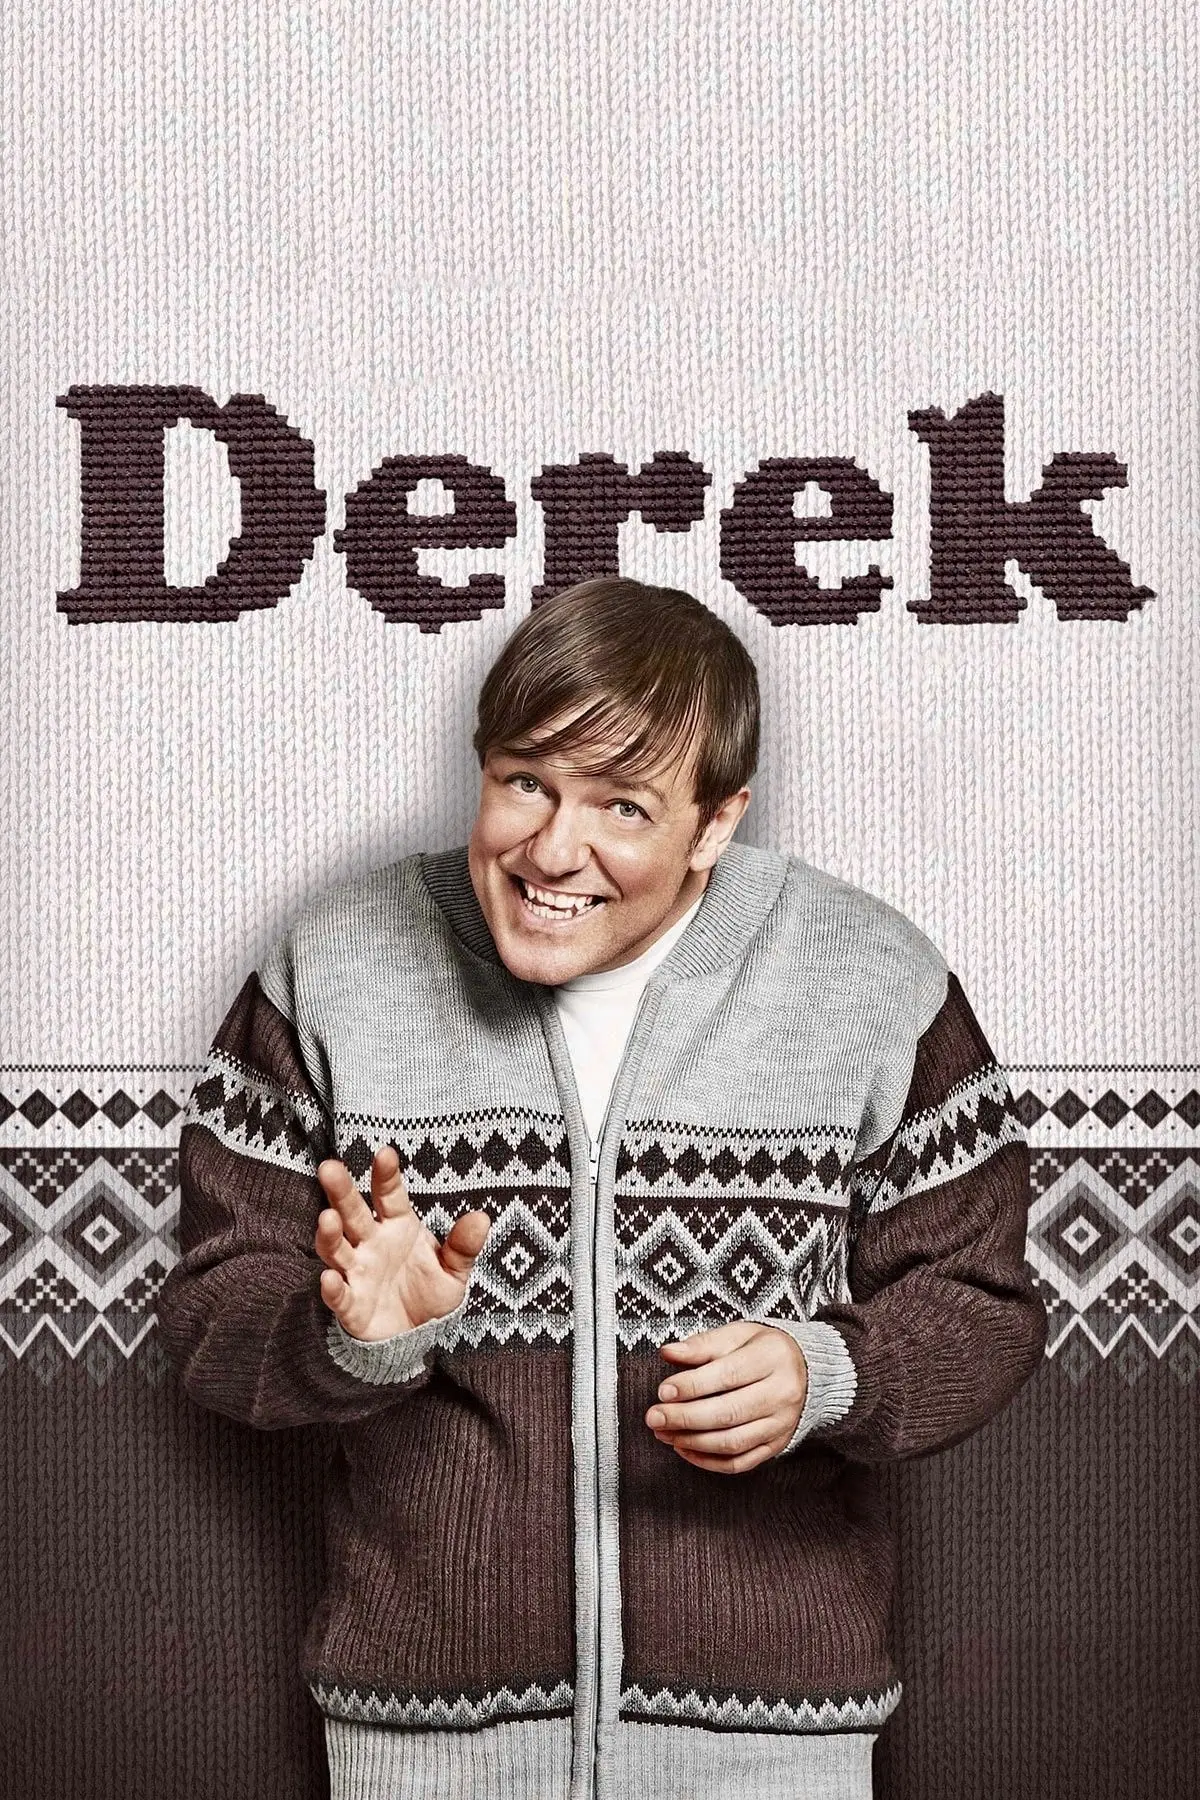 Derek S02E03 Épisode 3